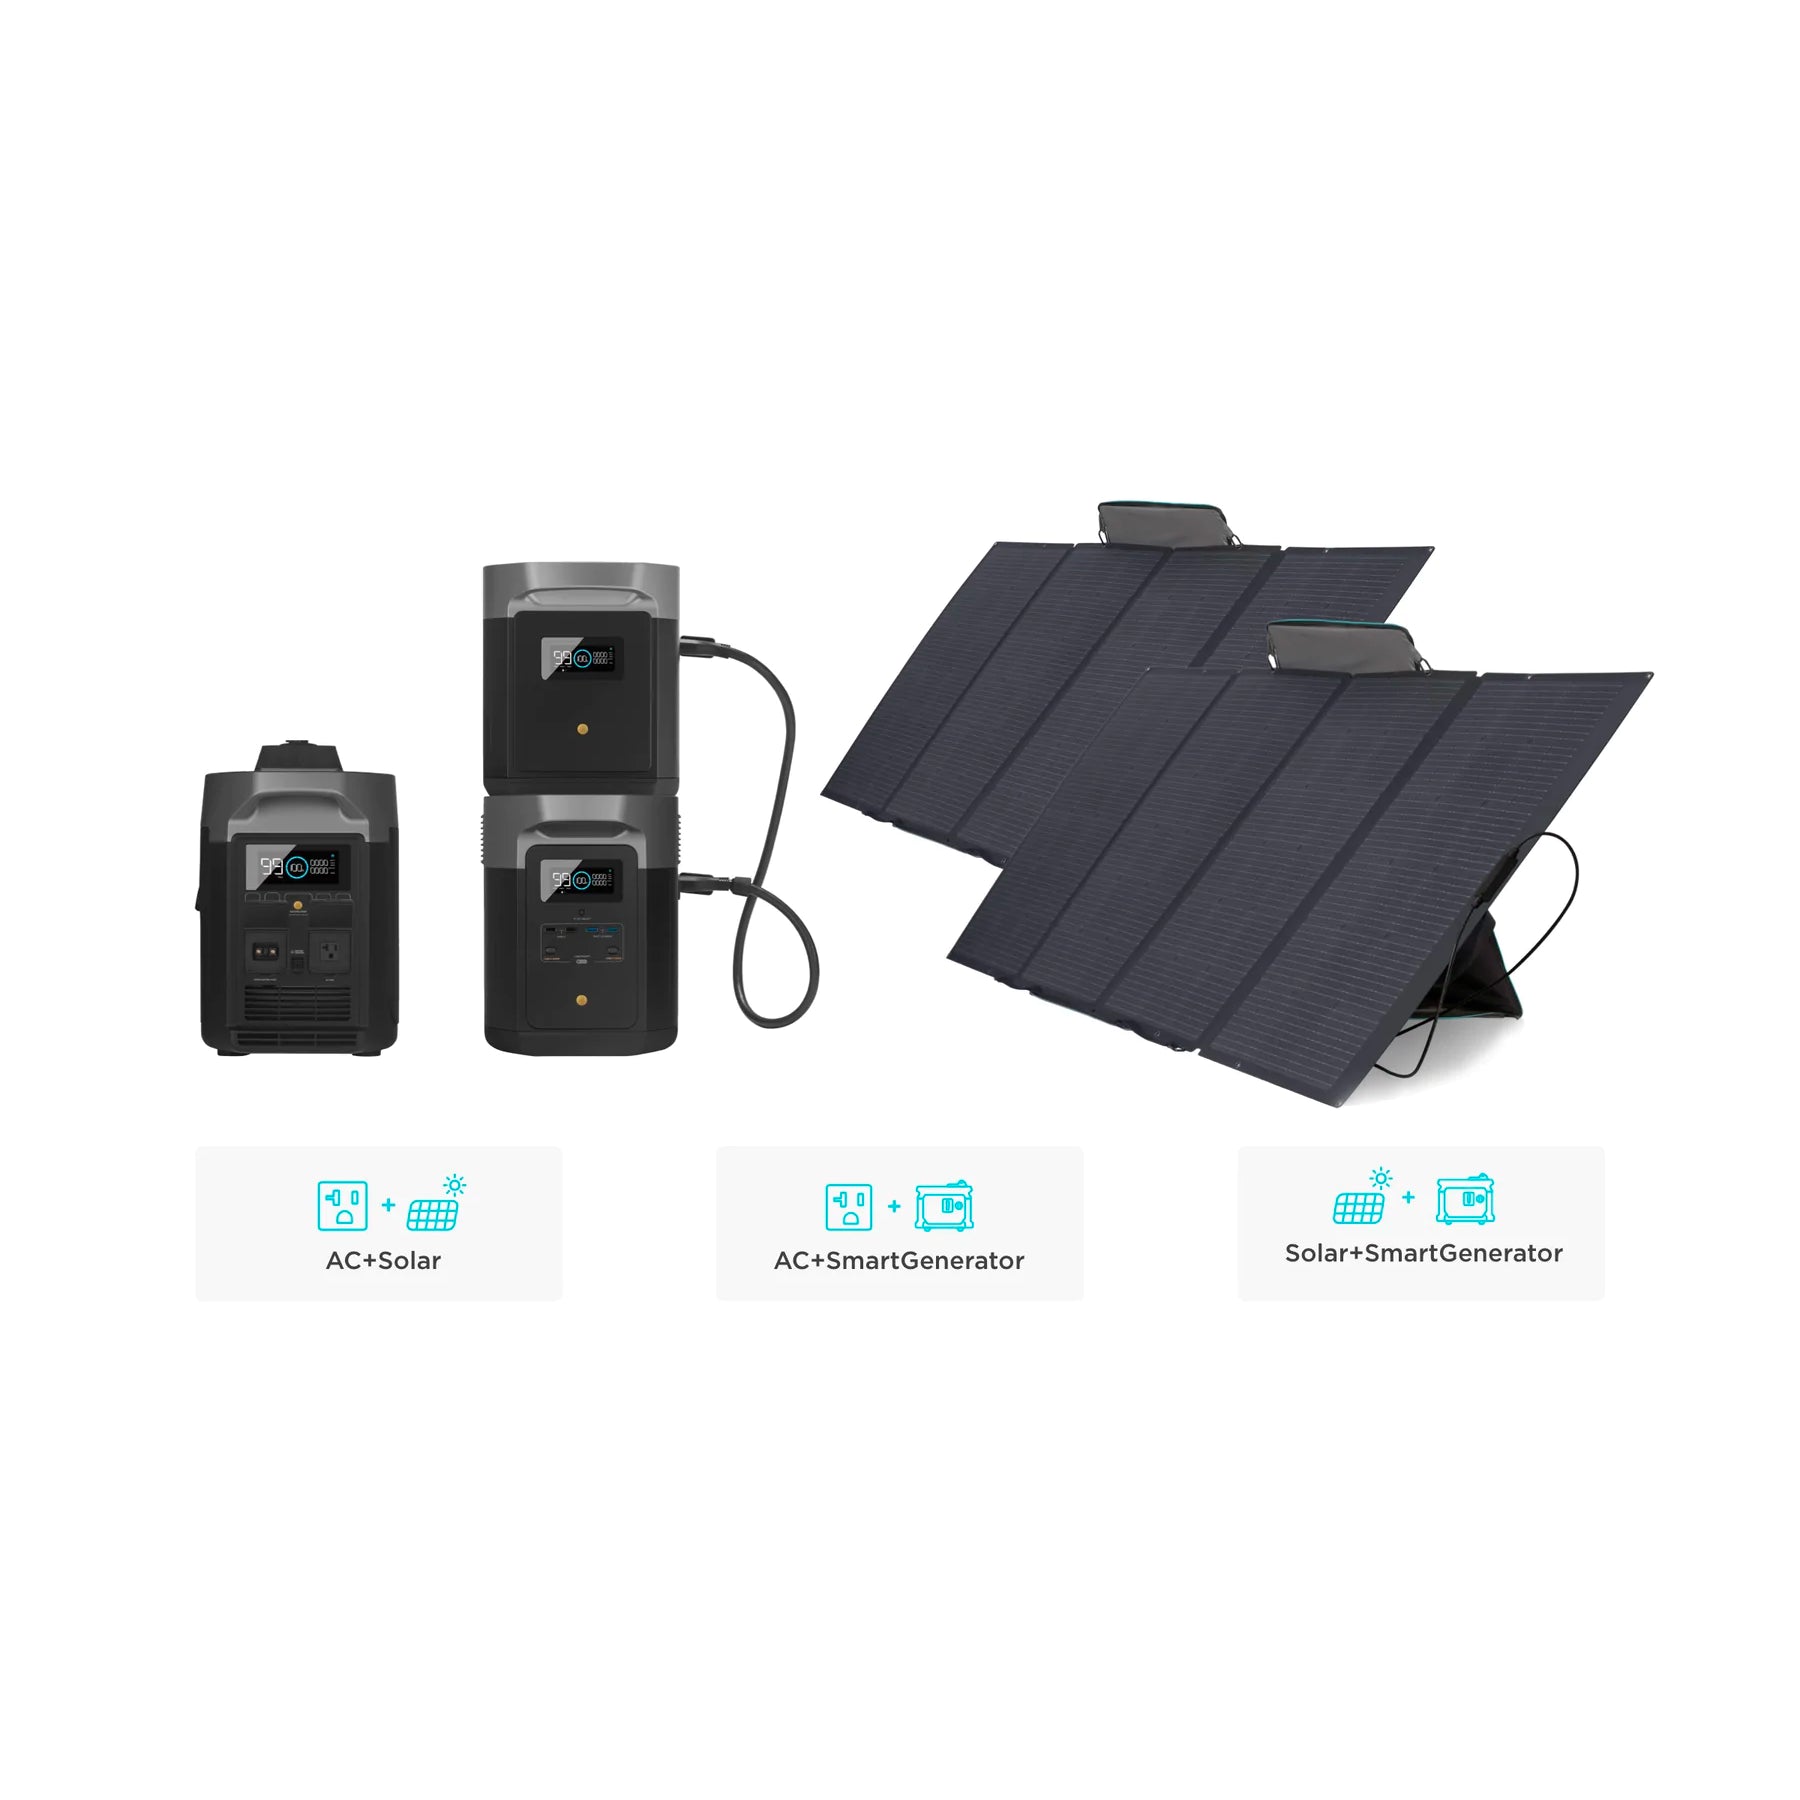 EcoFlow solar charging options